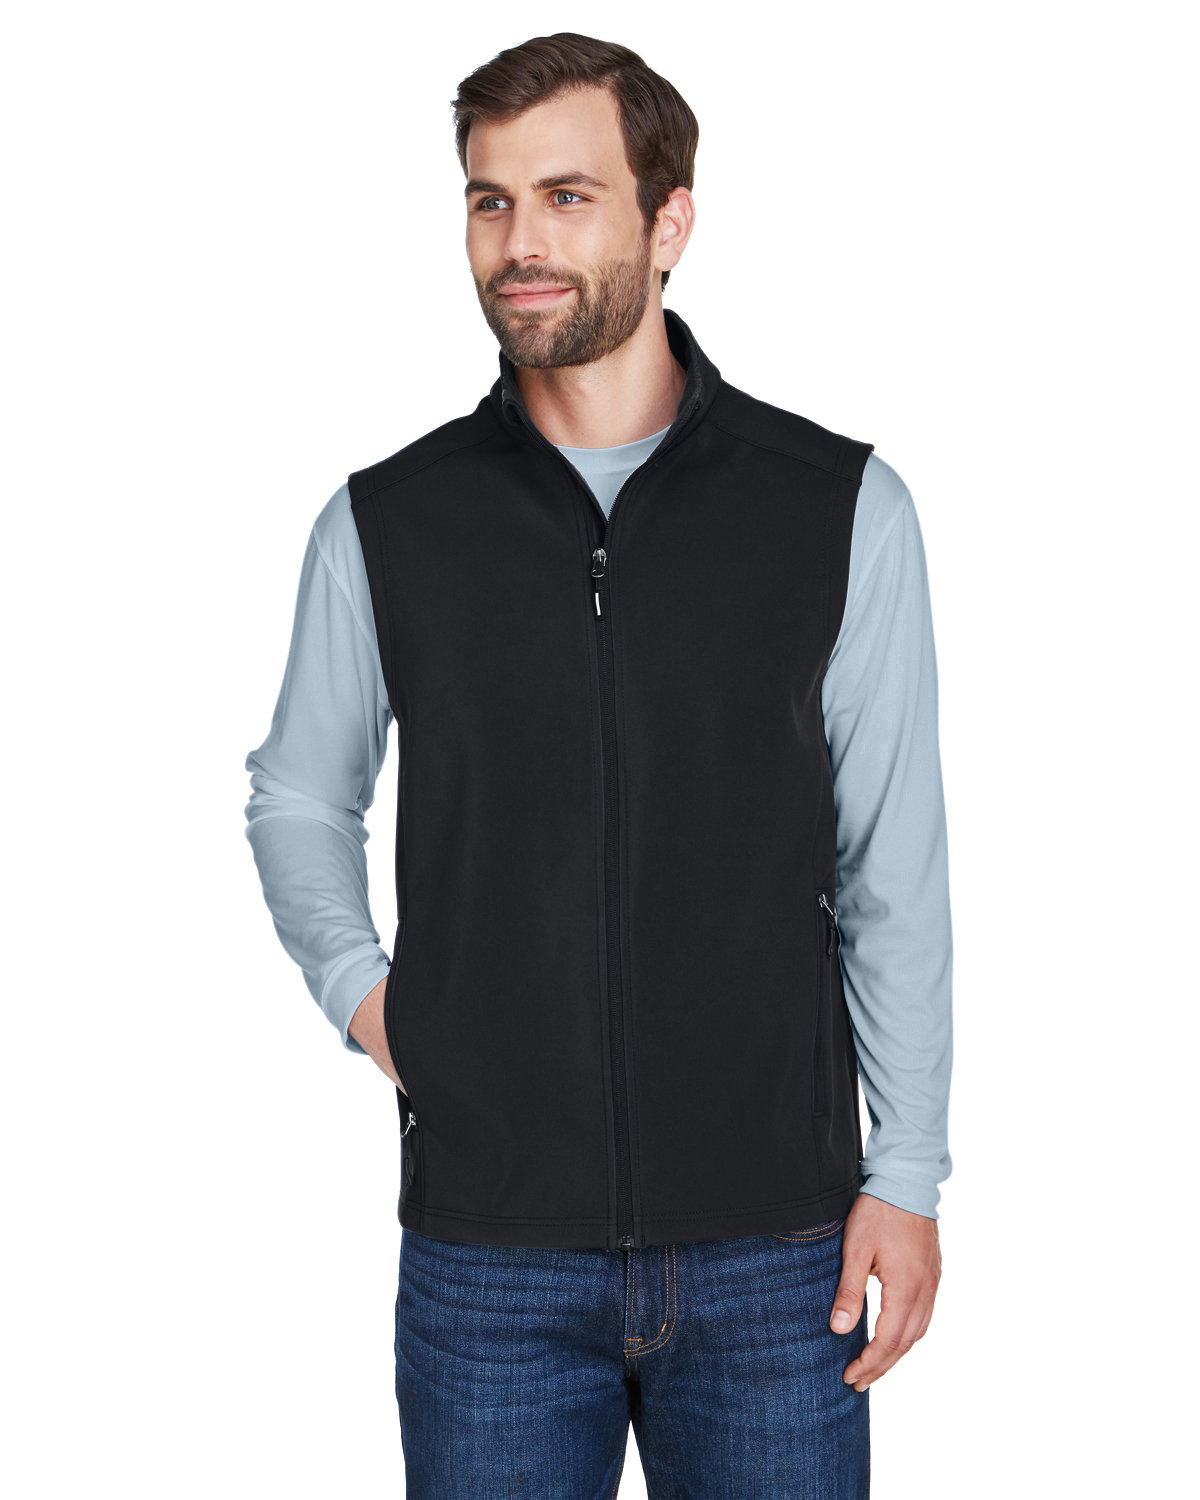 Core365 Men's Cruise Two-Layer Fleece Bonded Soft Shell Vest BLACK 